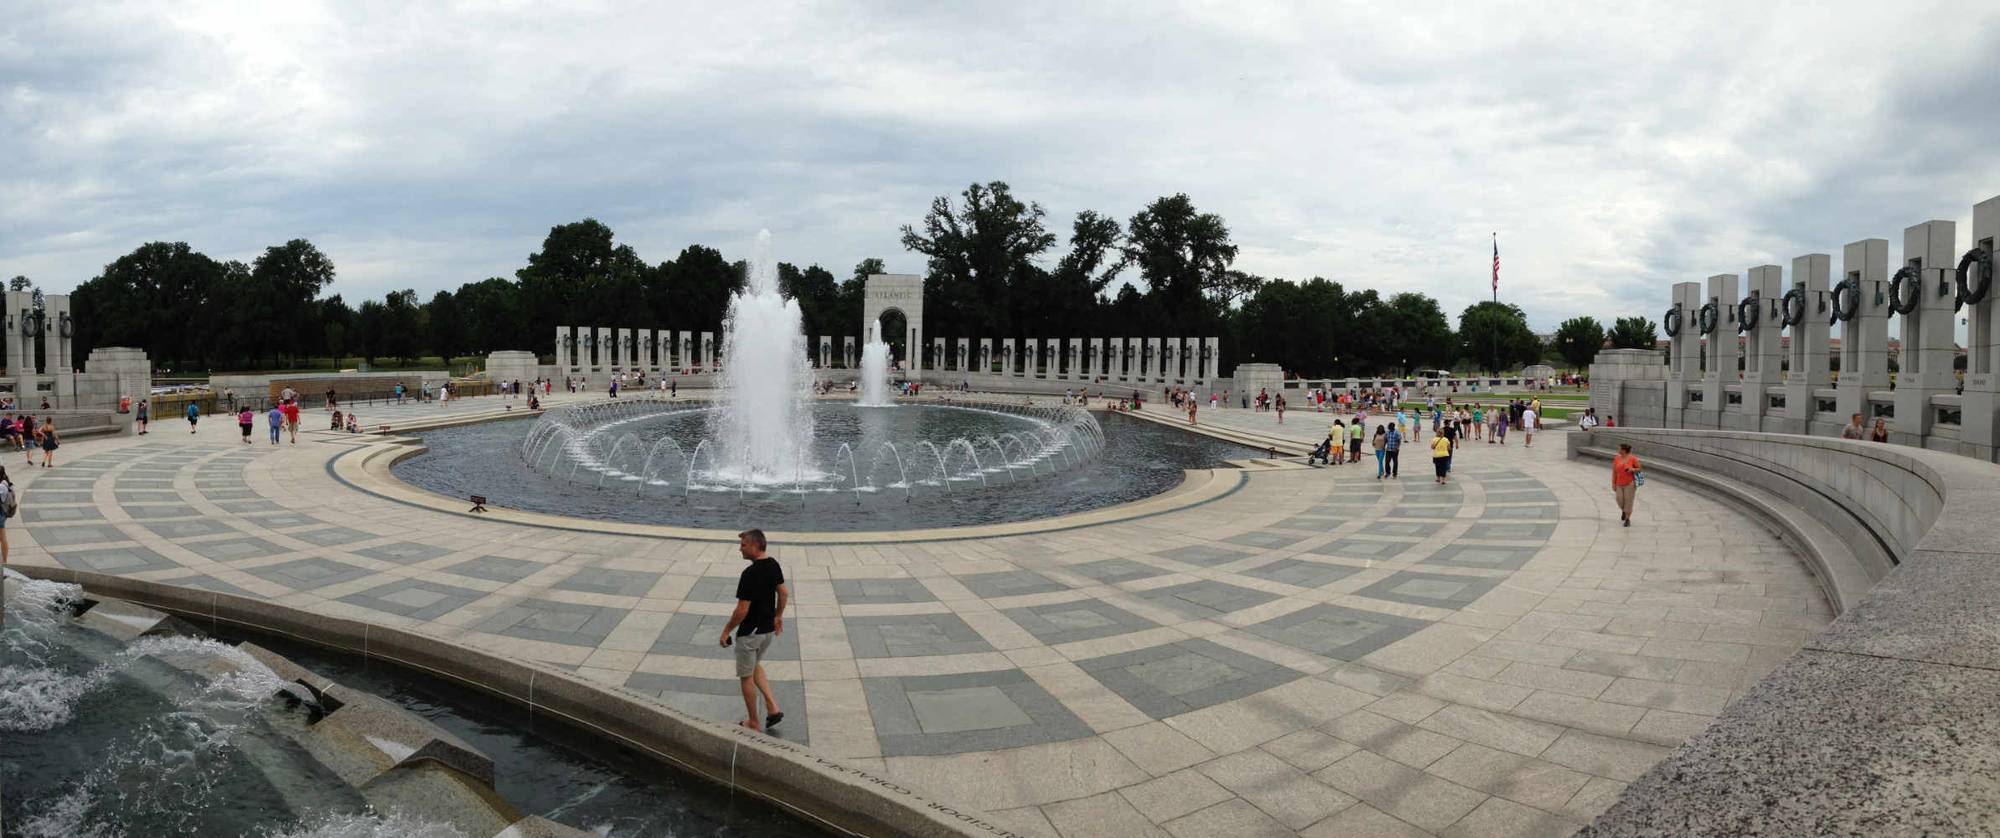 Panorama of the World War II memorial